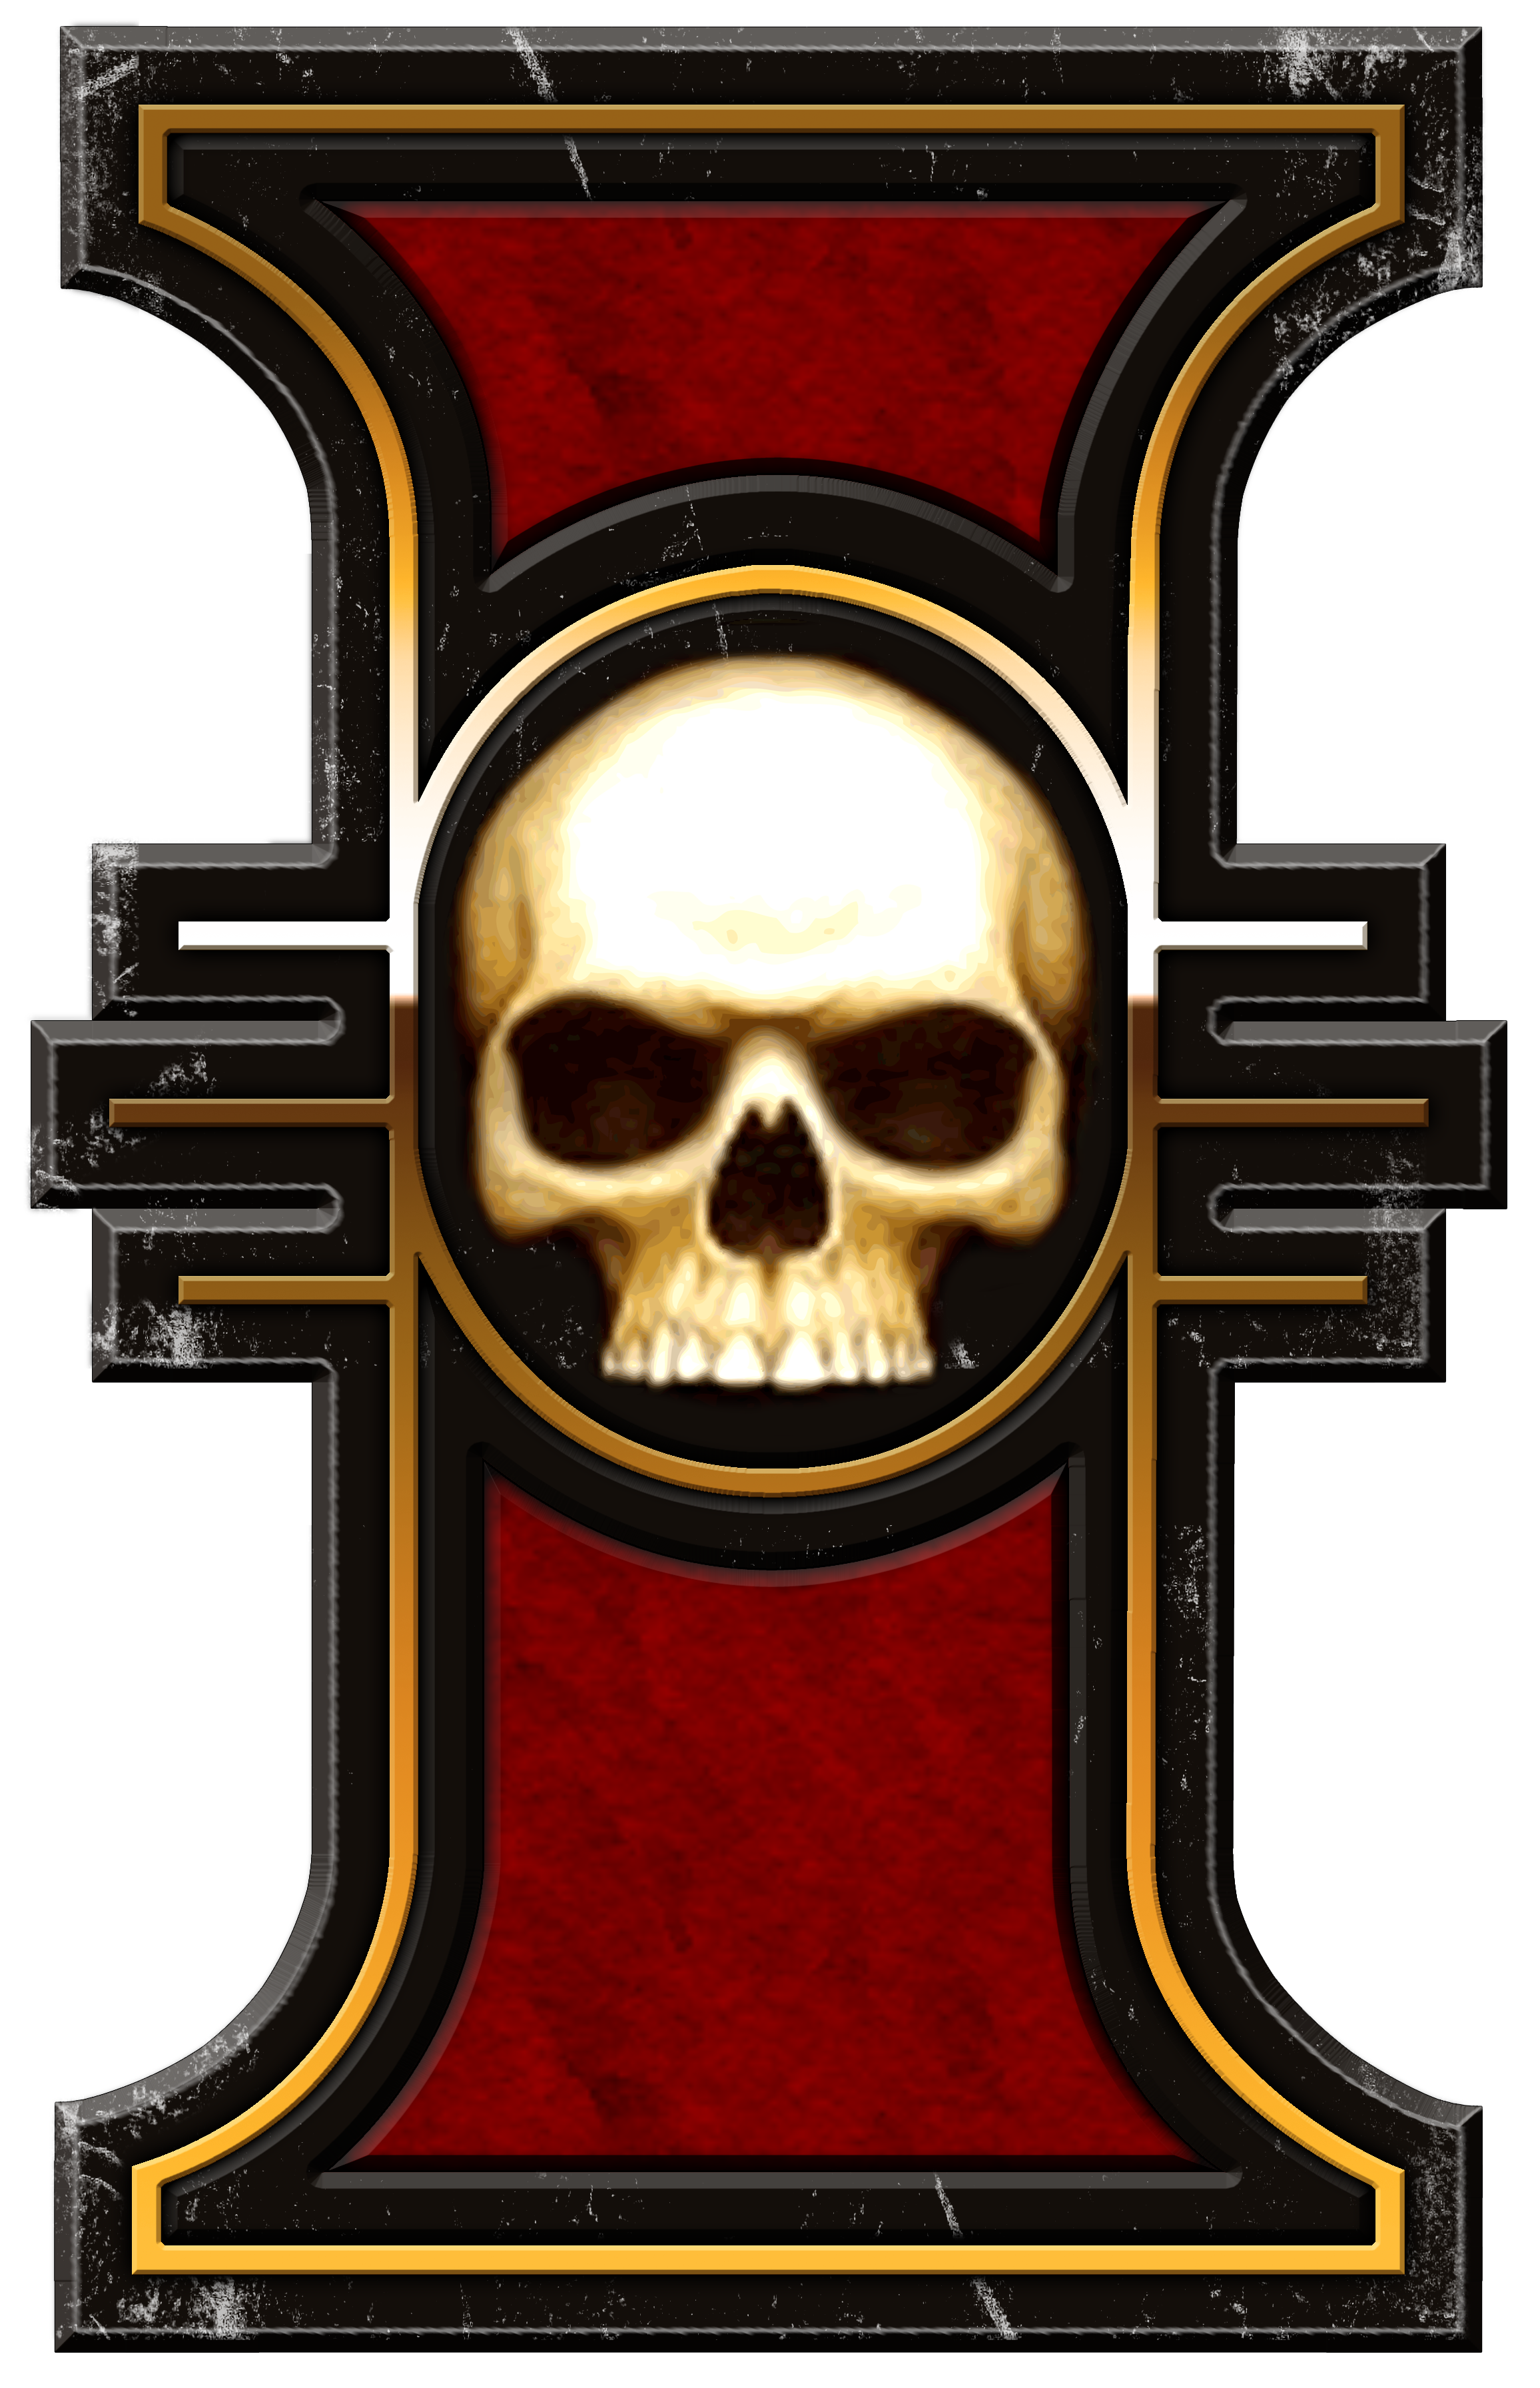 Image result for inquisition symbol